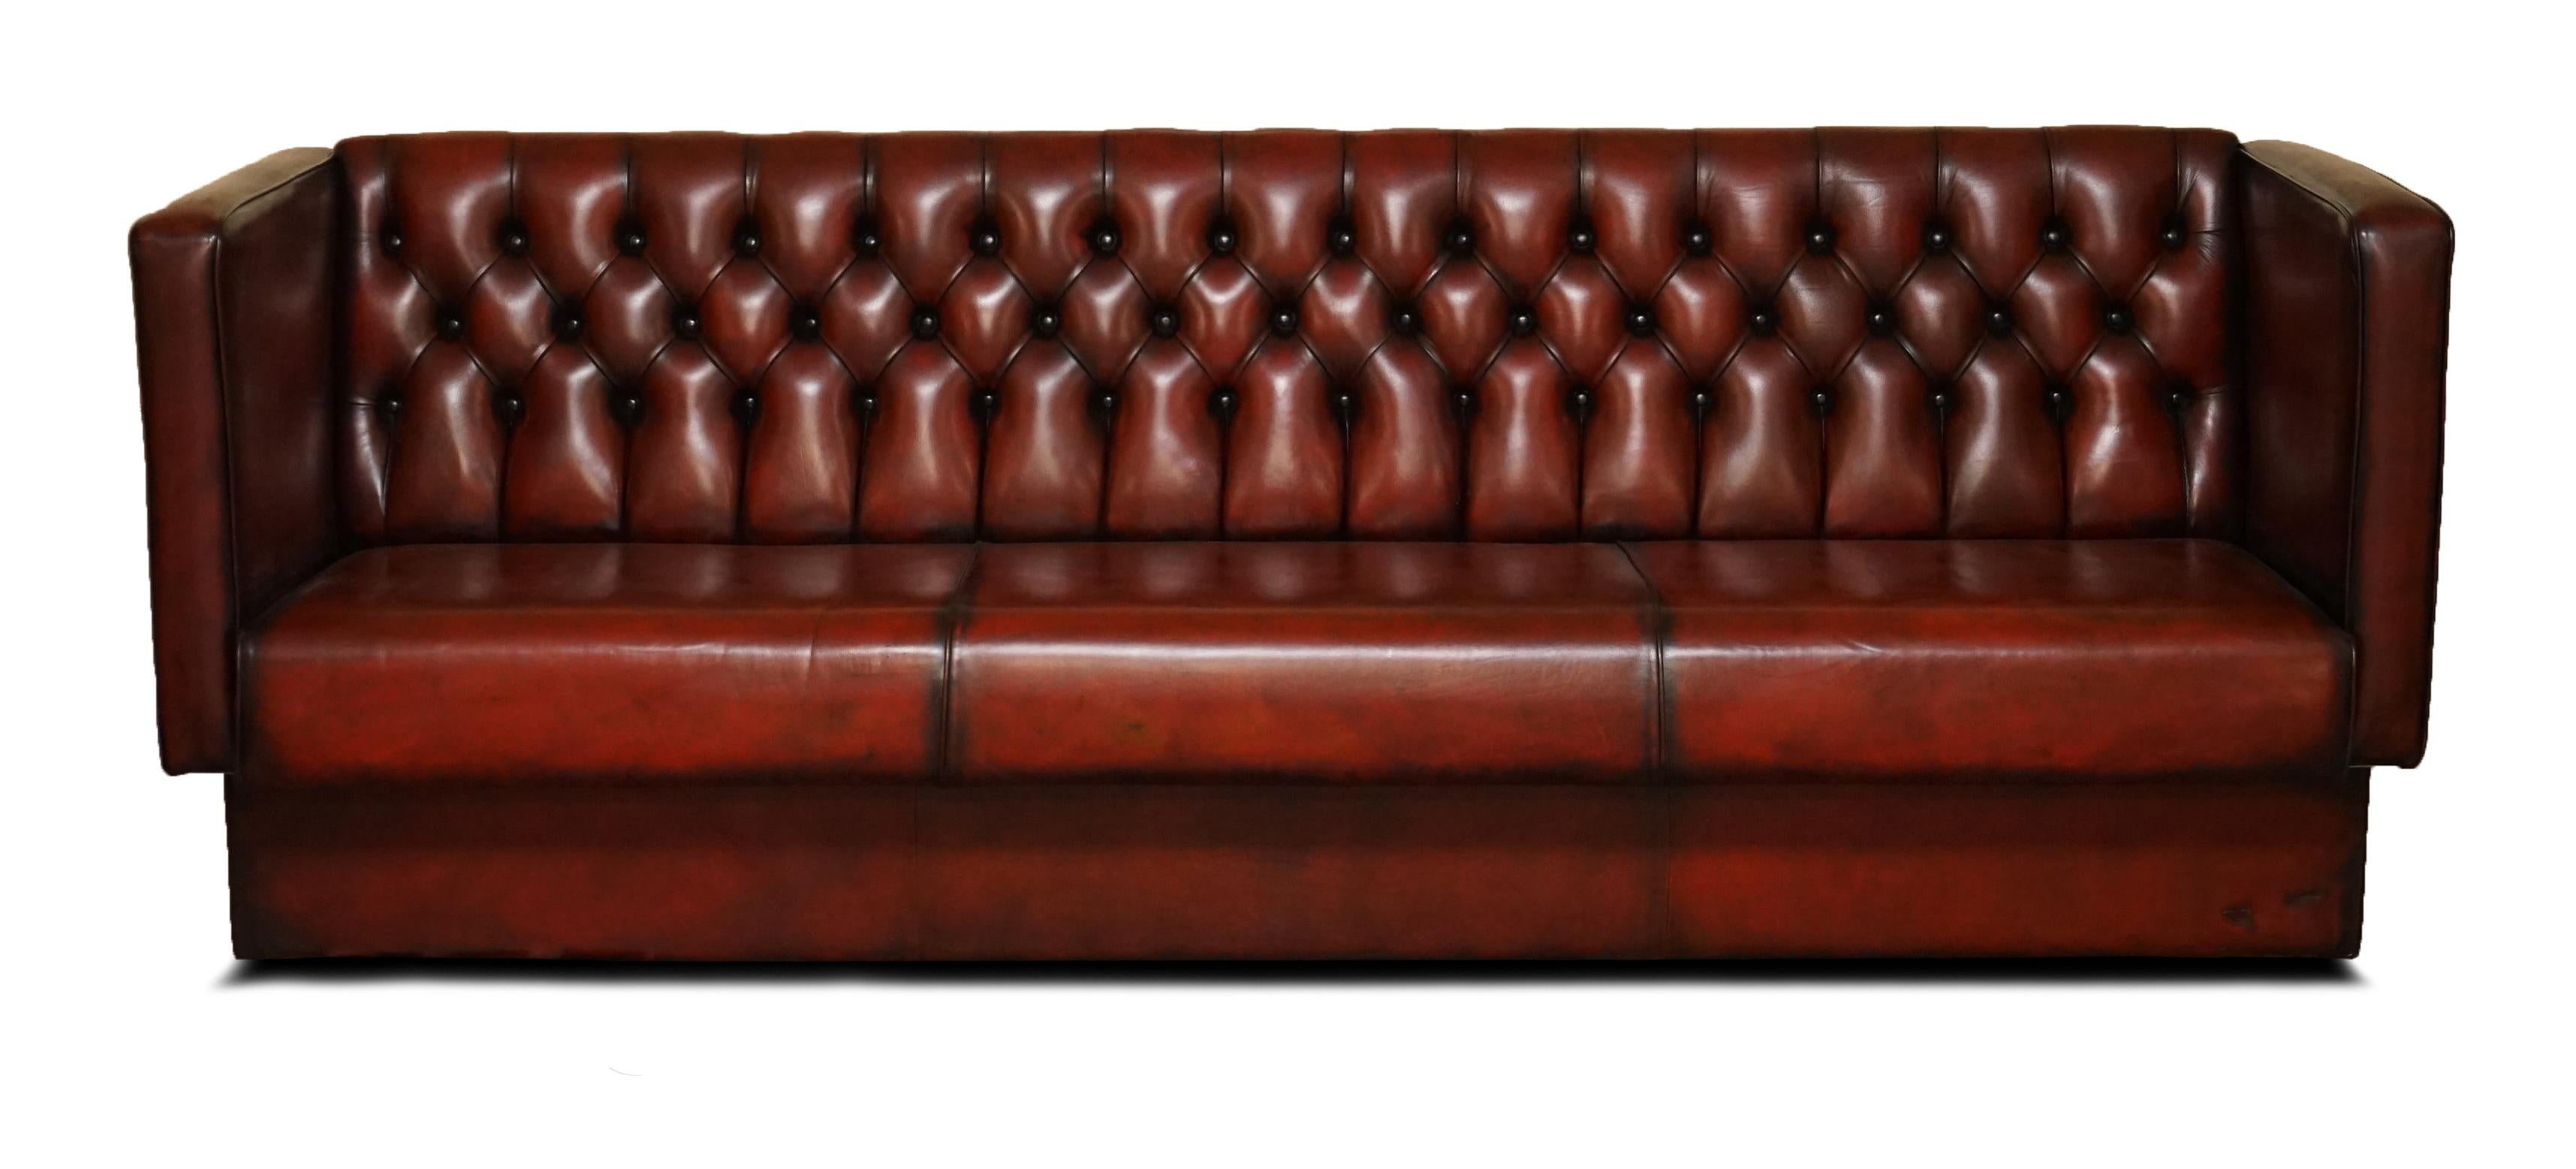 pair leather sofas